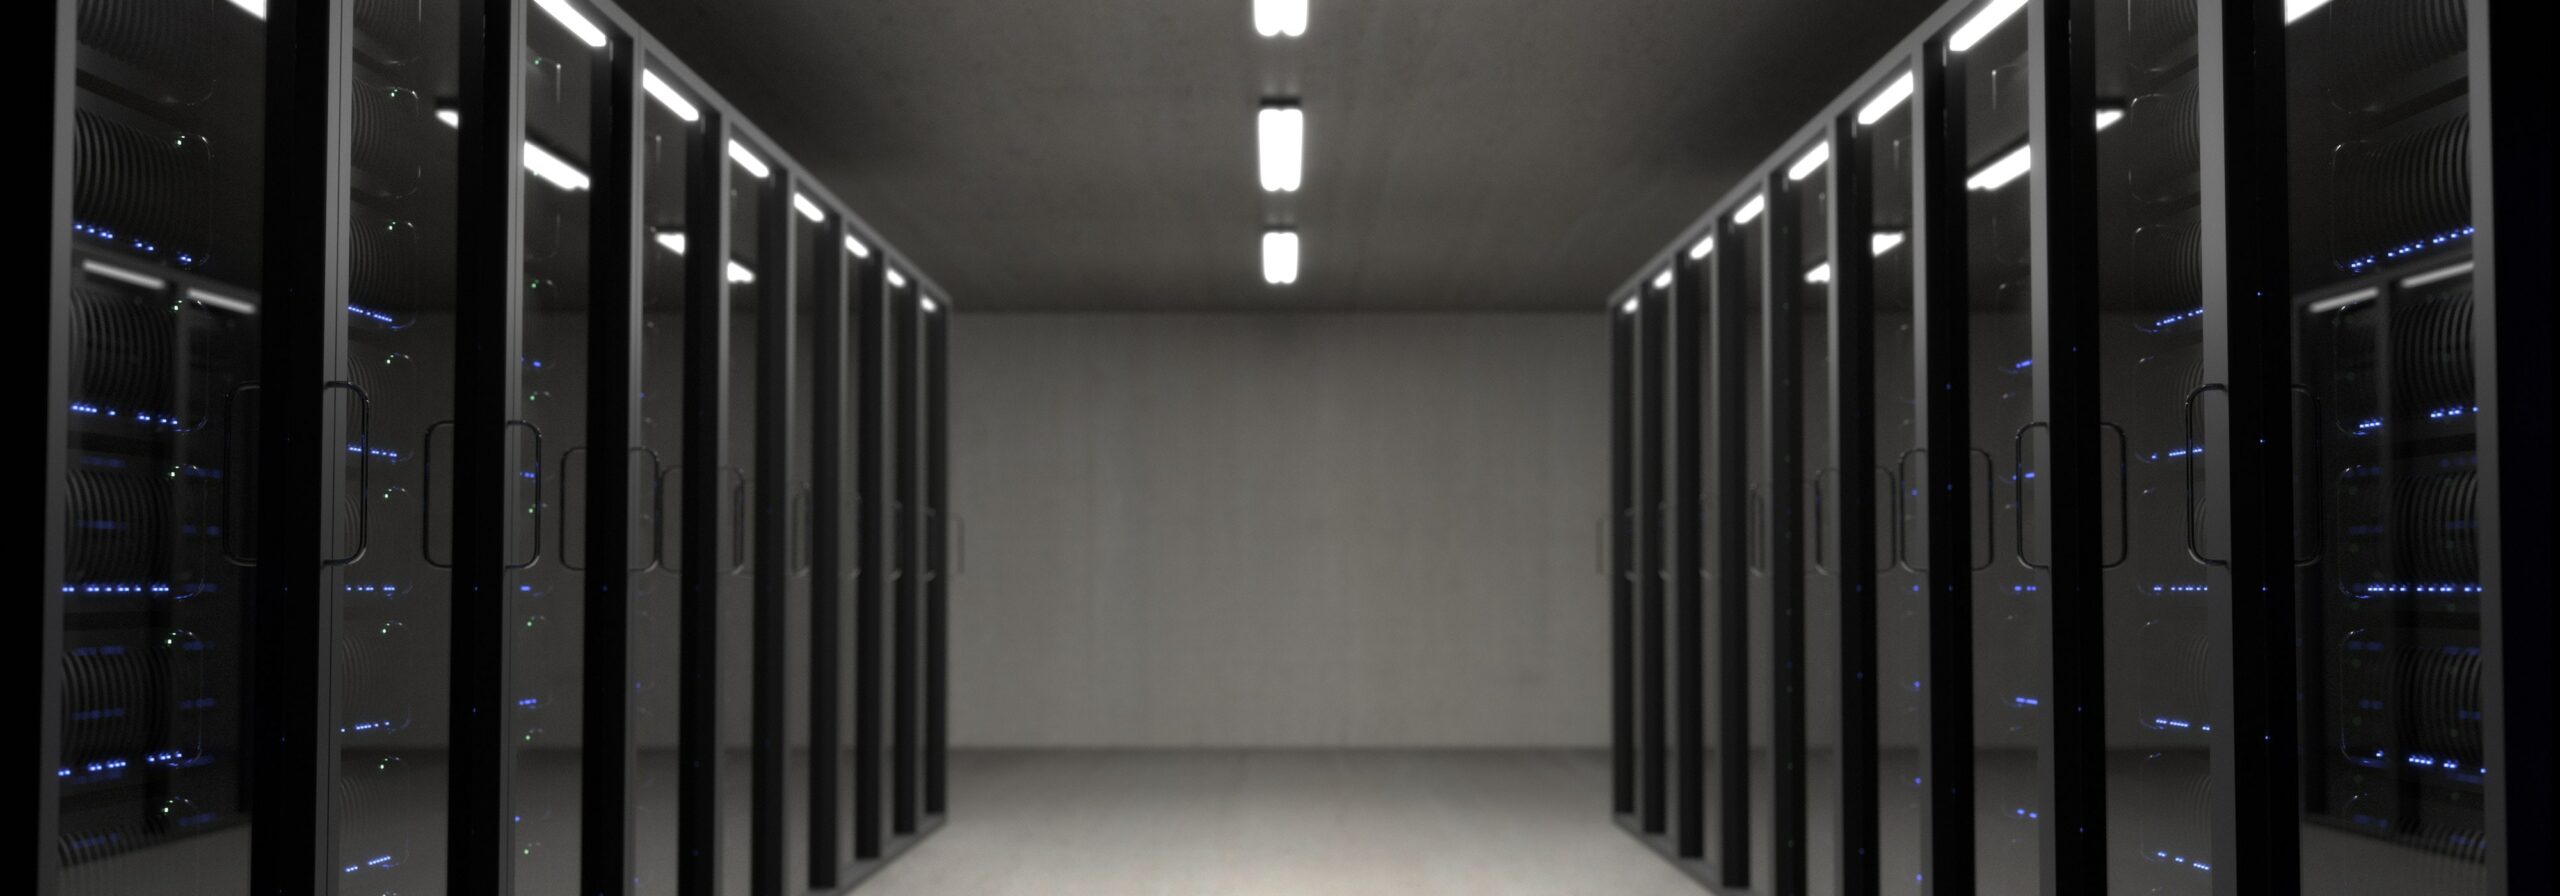 cloud storage data center cabinets